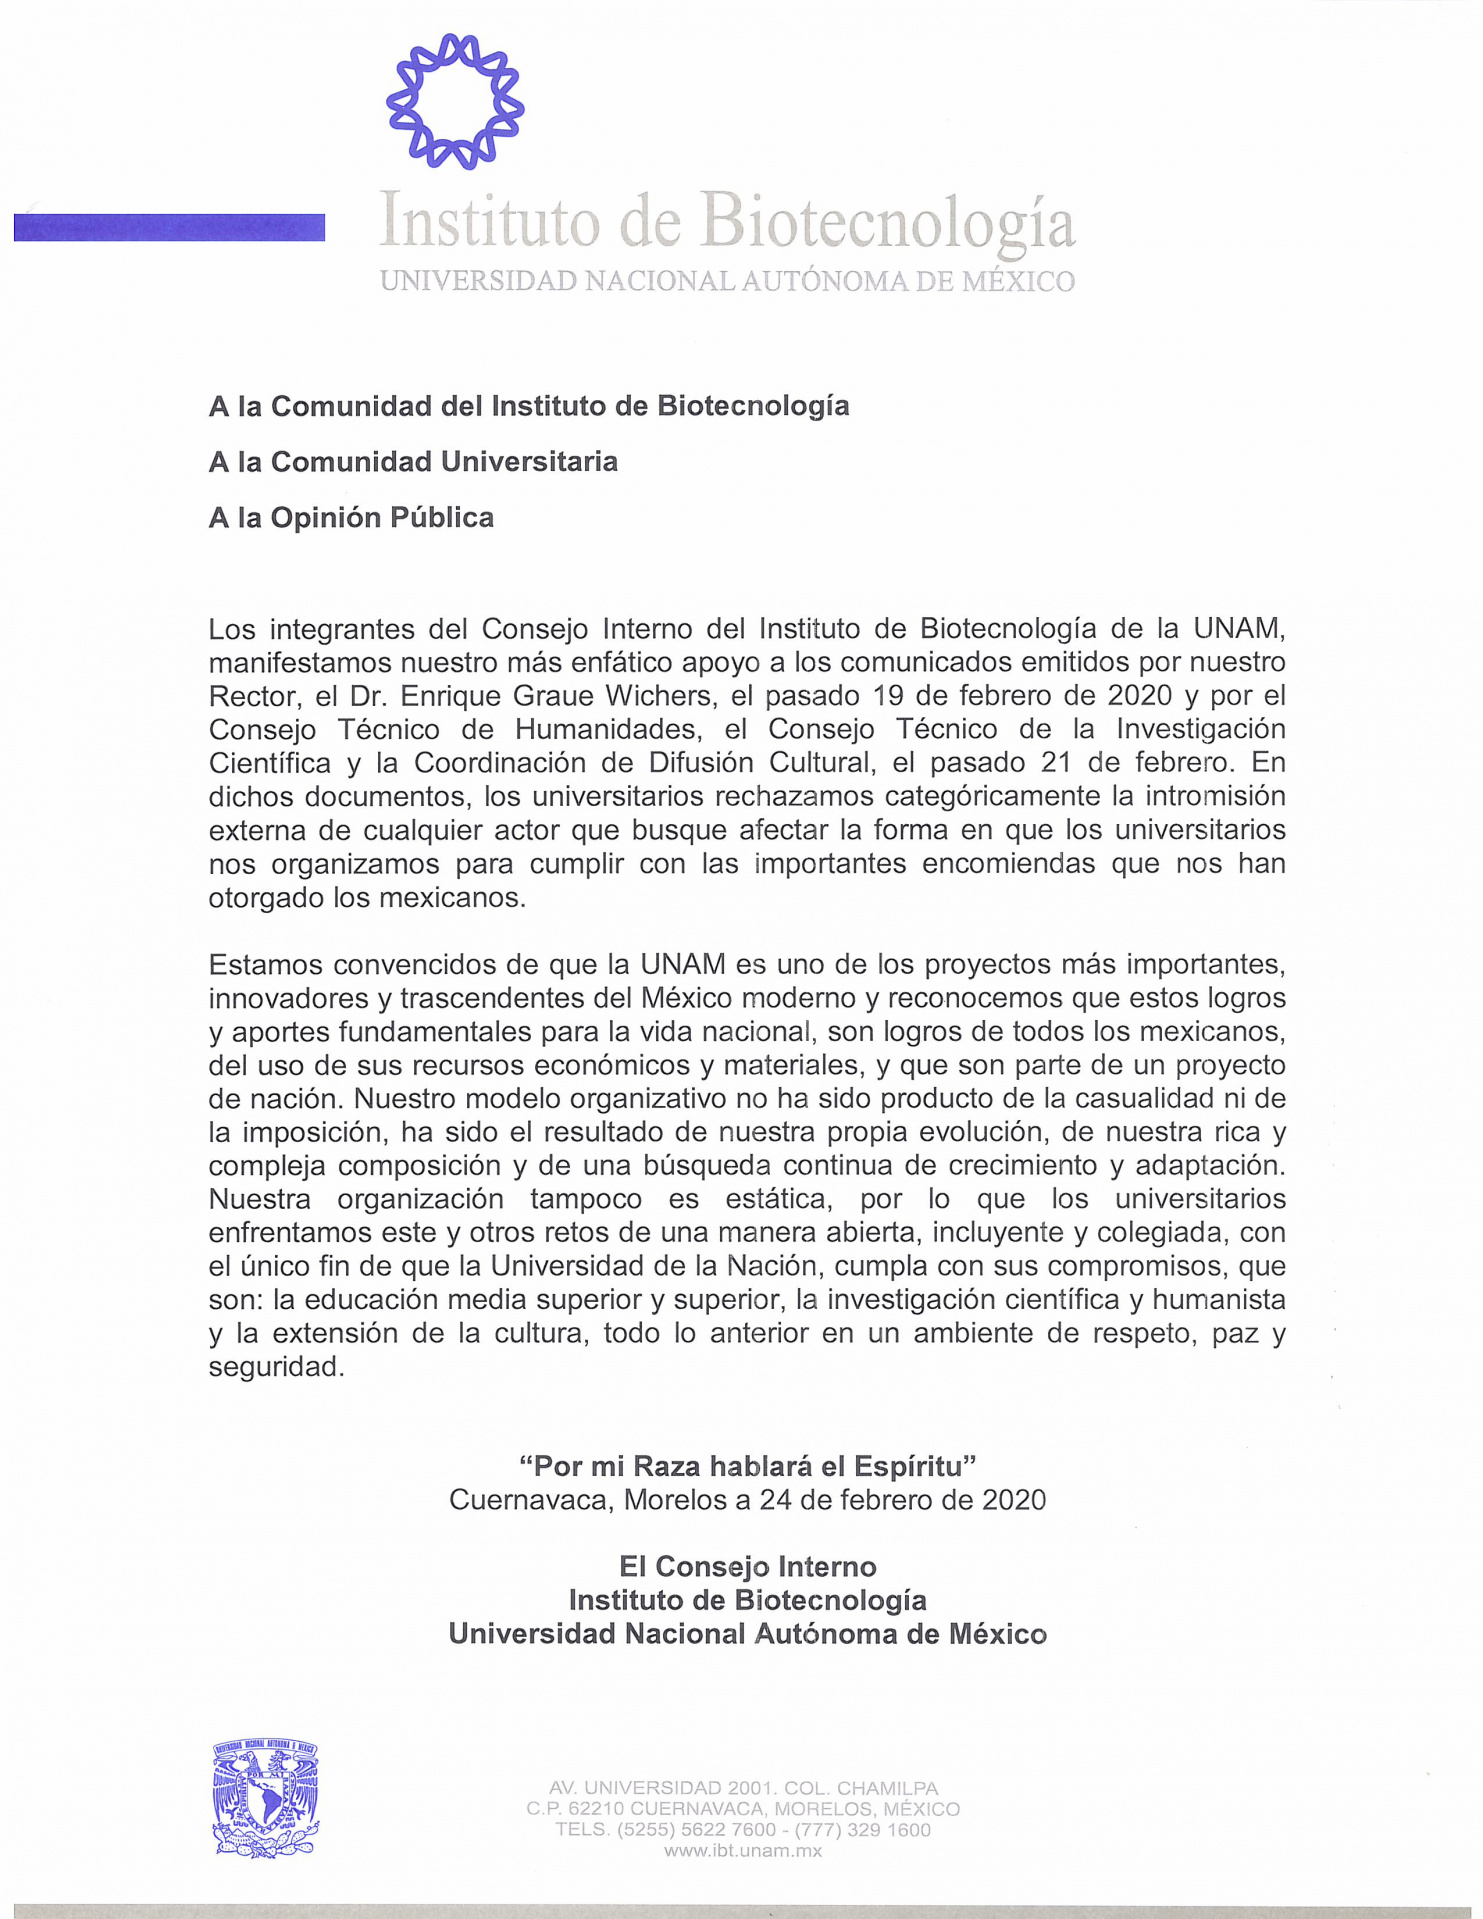 Comunicado del C.I. del IBt/UNAM